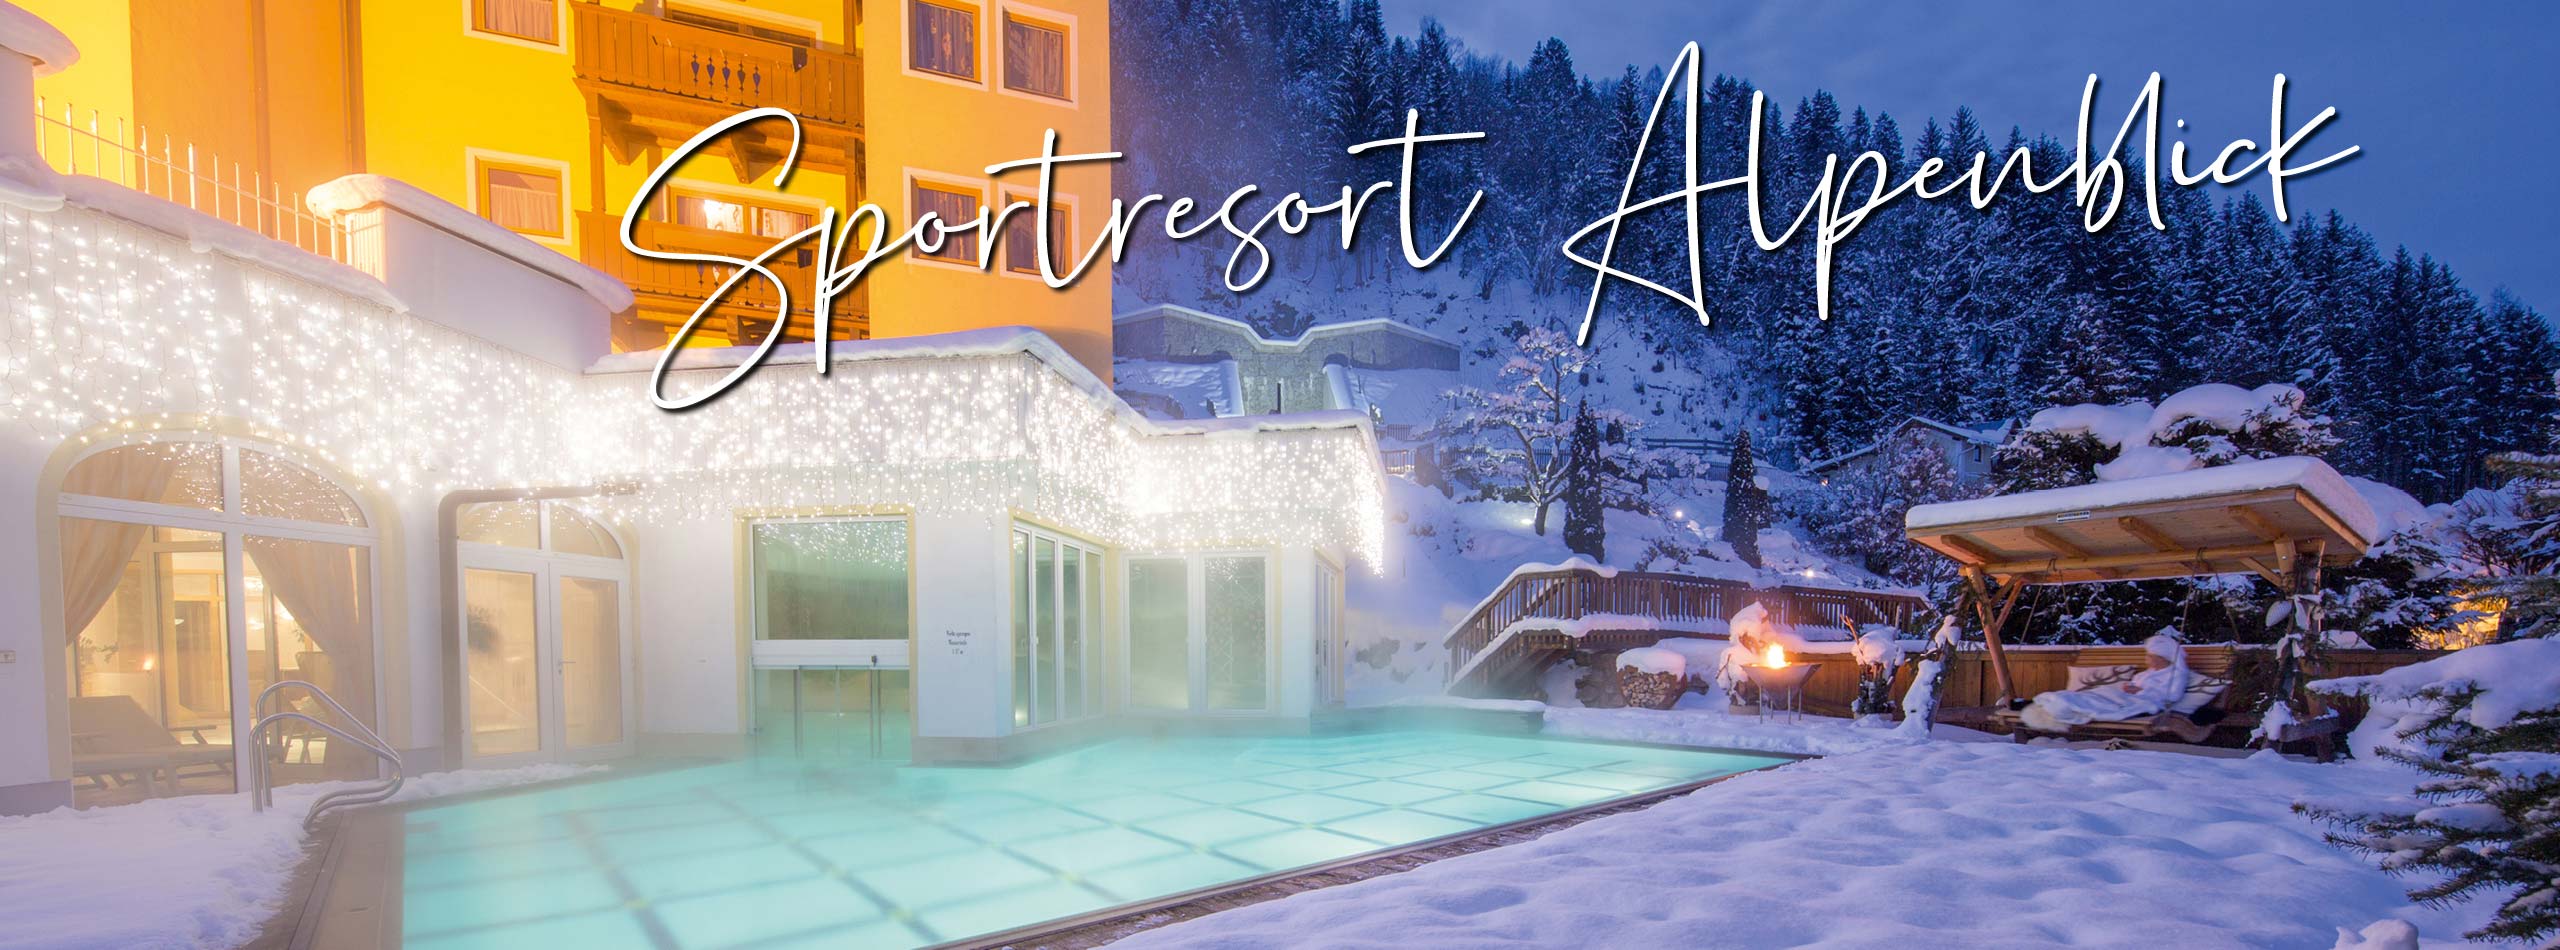 Sportresort Alpenblick Hotel Zell am See Austria Header Niche Destinations 4